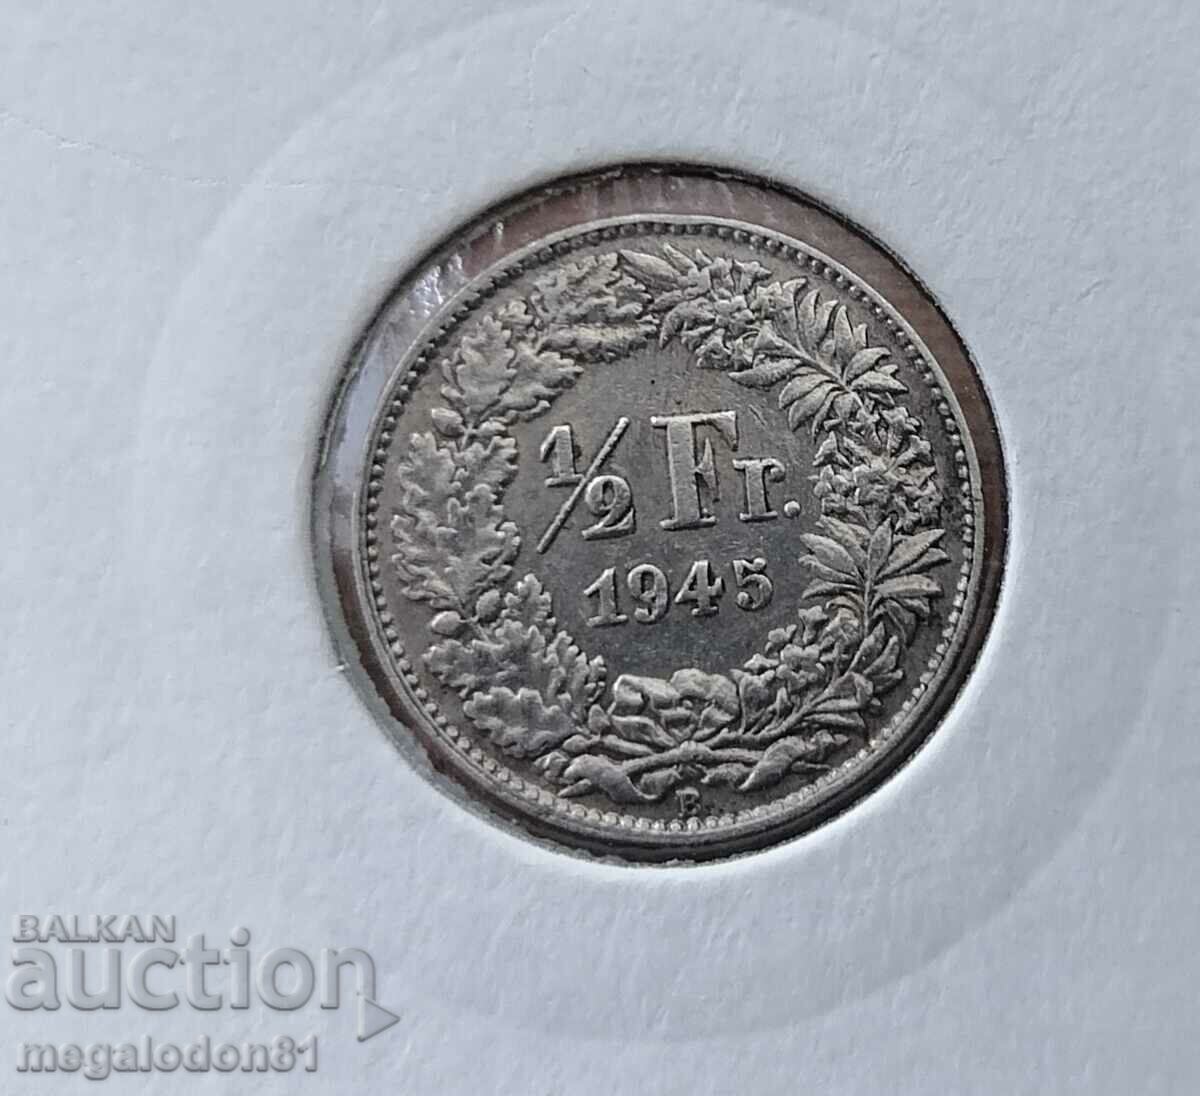 Switzerland - 1/2 franc 1945